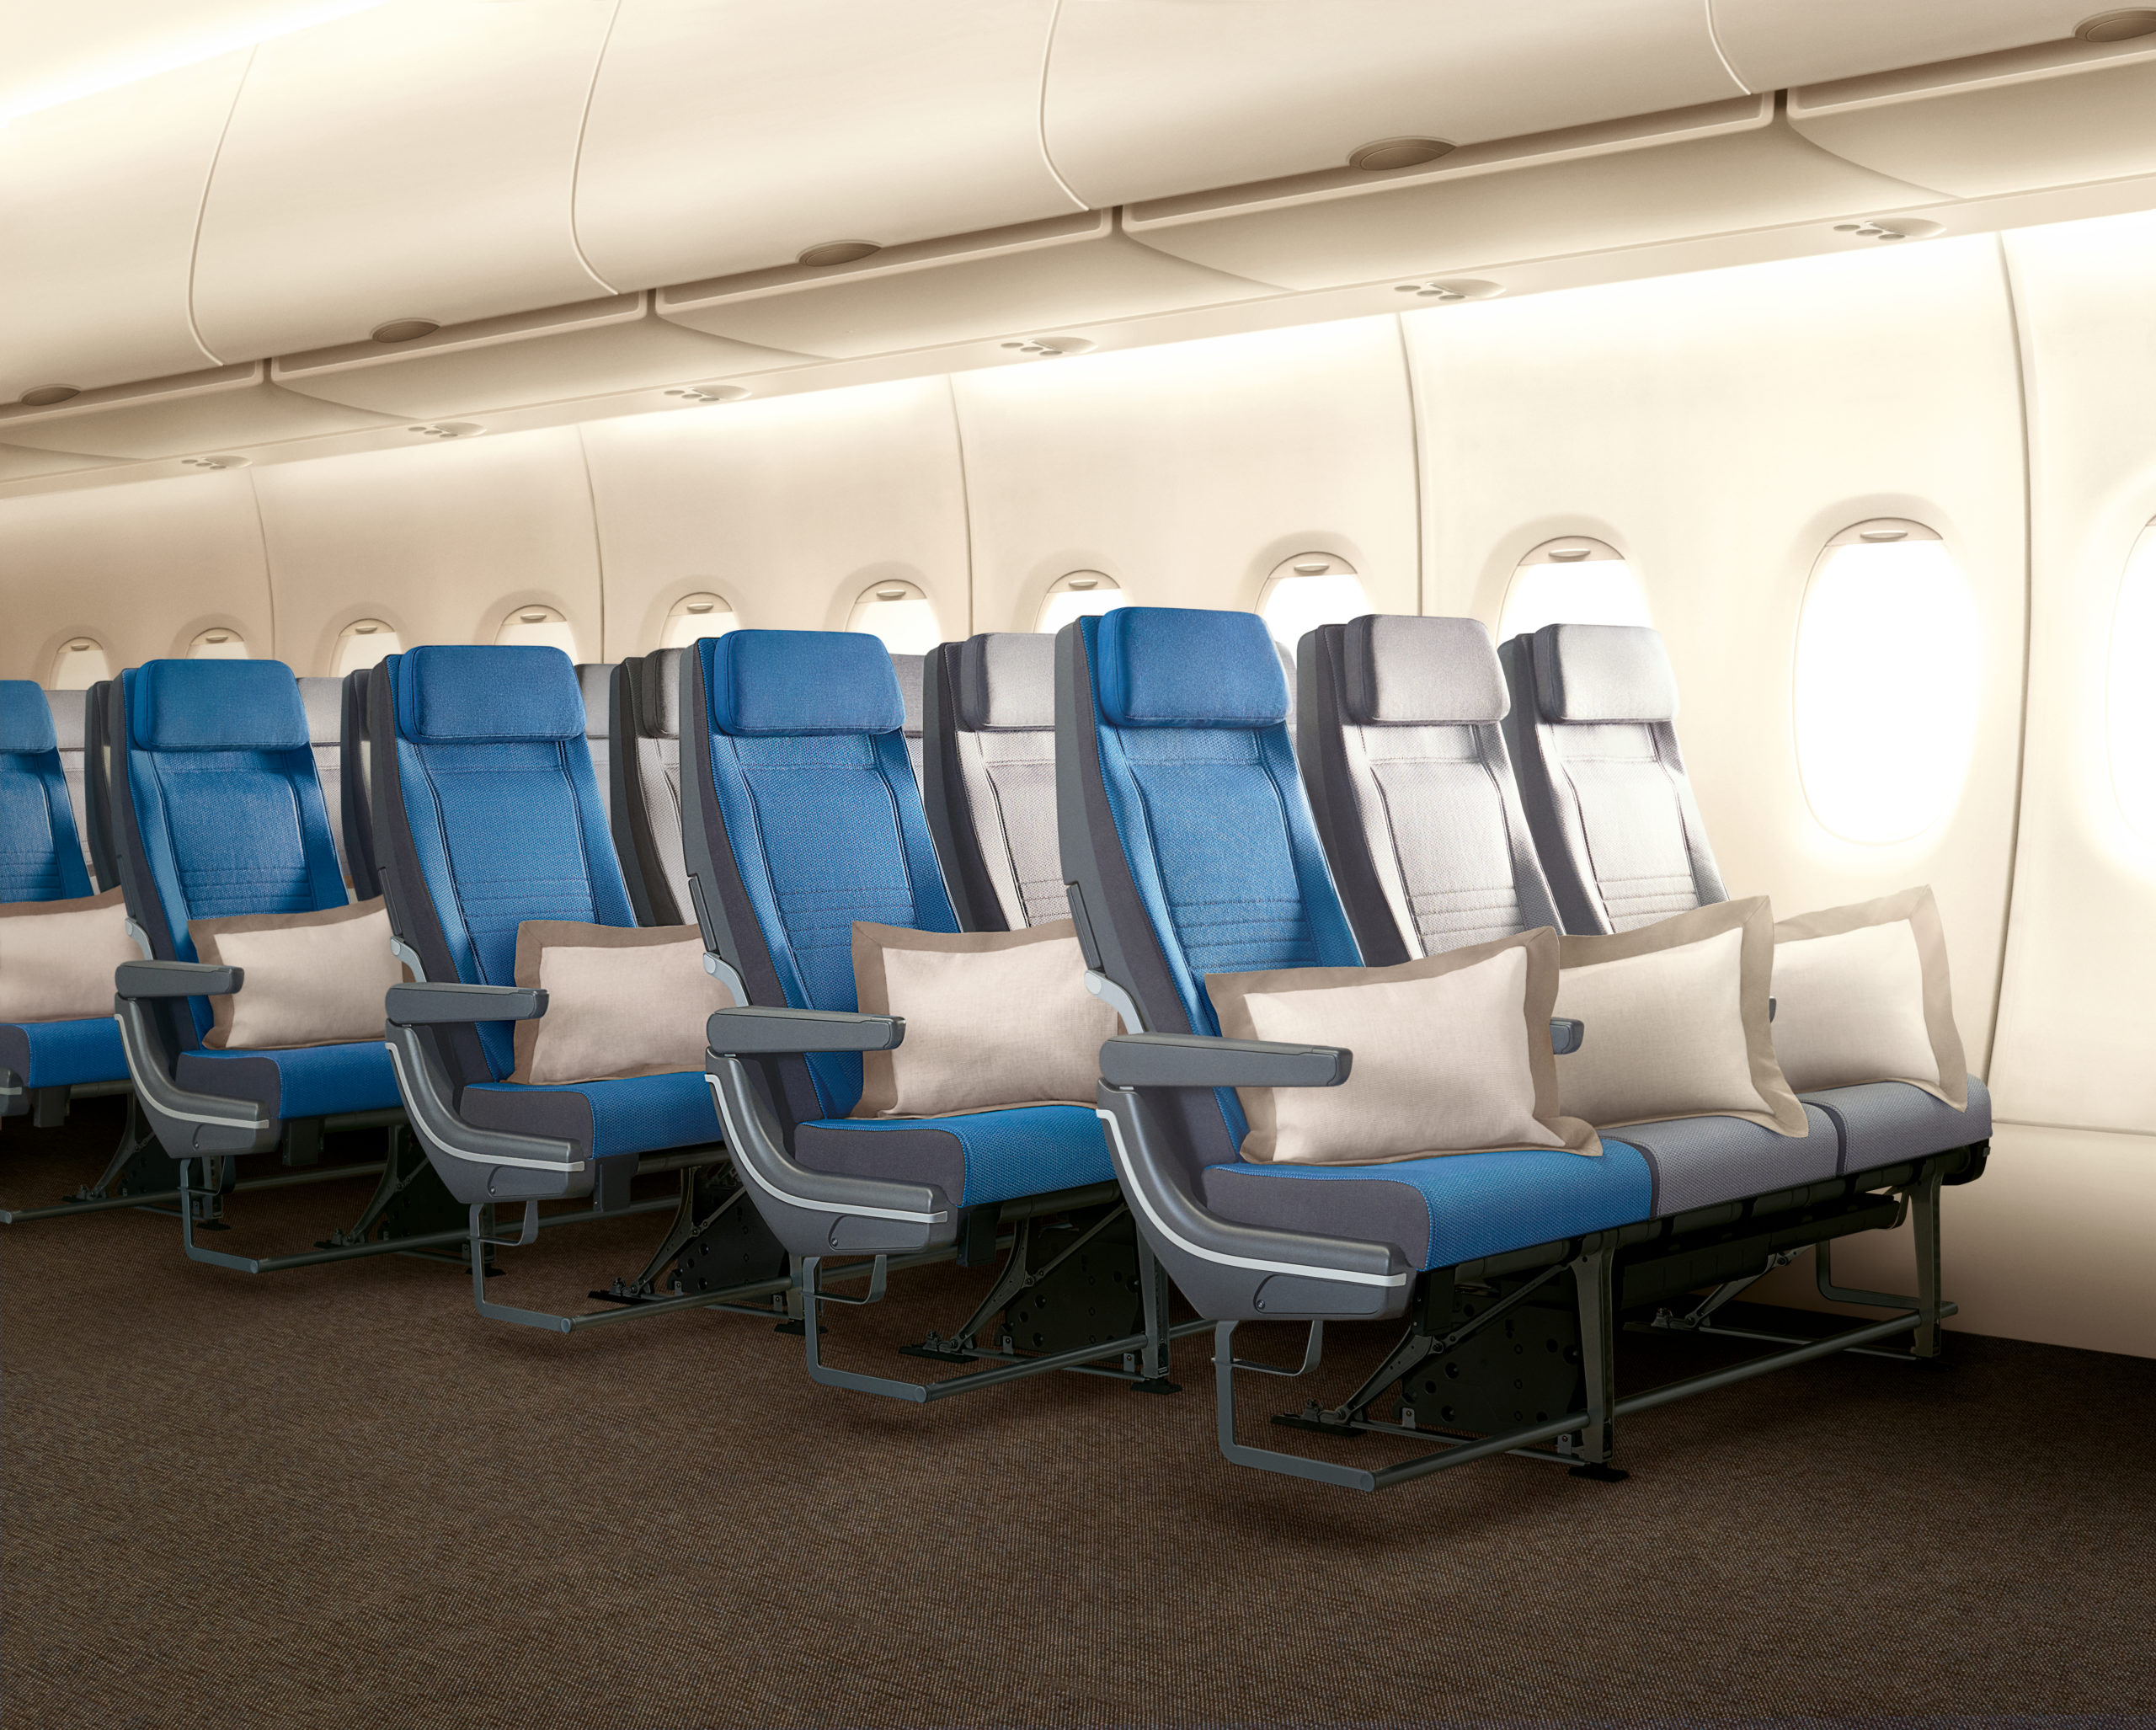 3 кресел. Кресла Airbus a350 эконом класса. Airbus 350 кресла. Airbus а380 кресла. Airbus a320 Singapore Airlines салон.